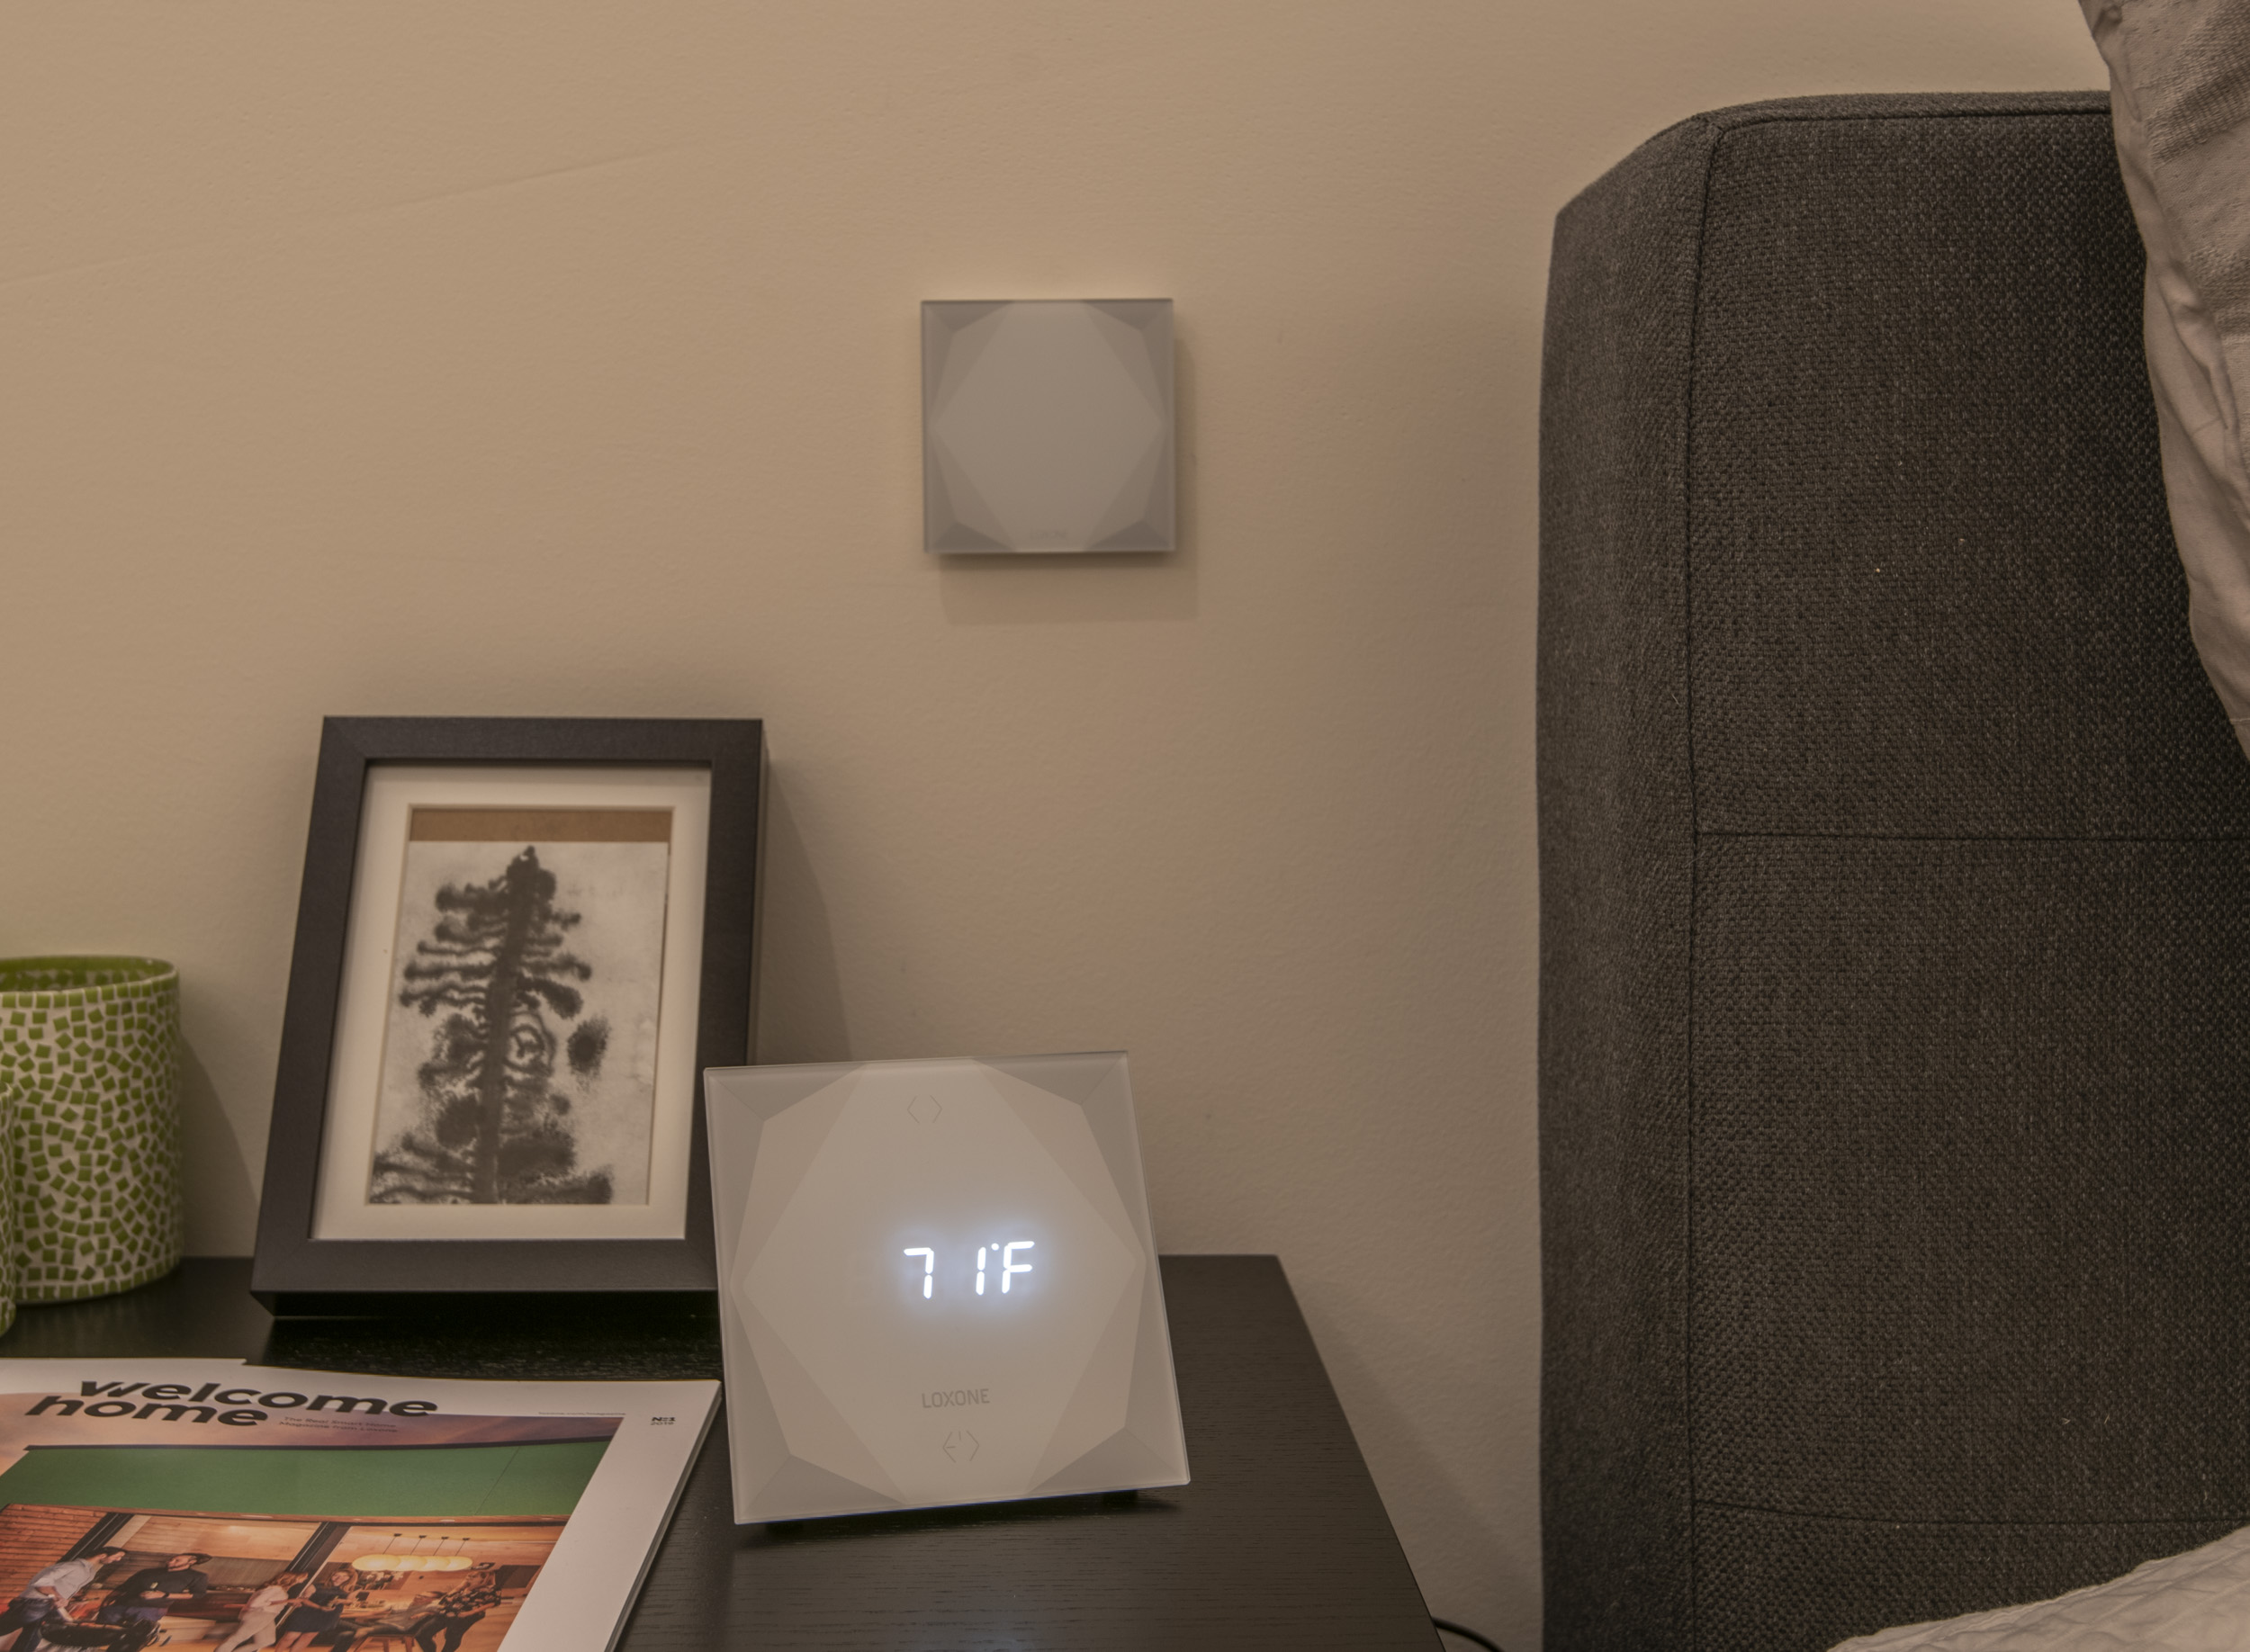 Loxone smart thermostat for home temperature control